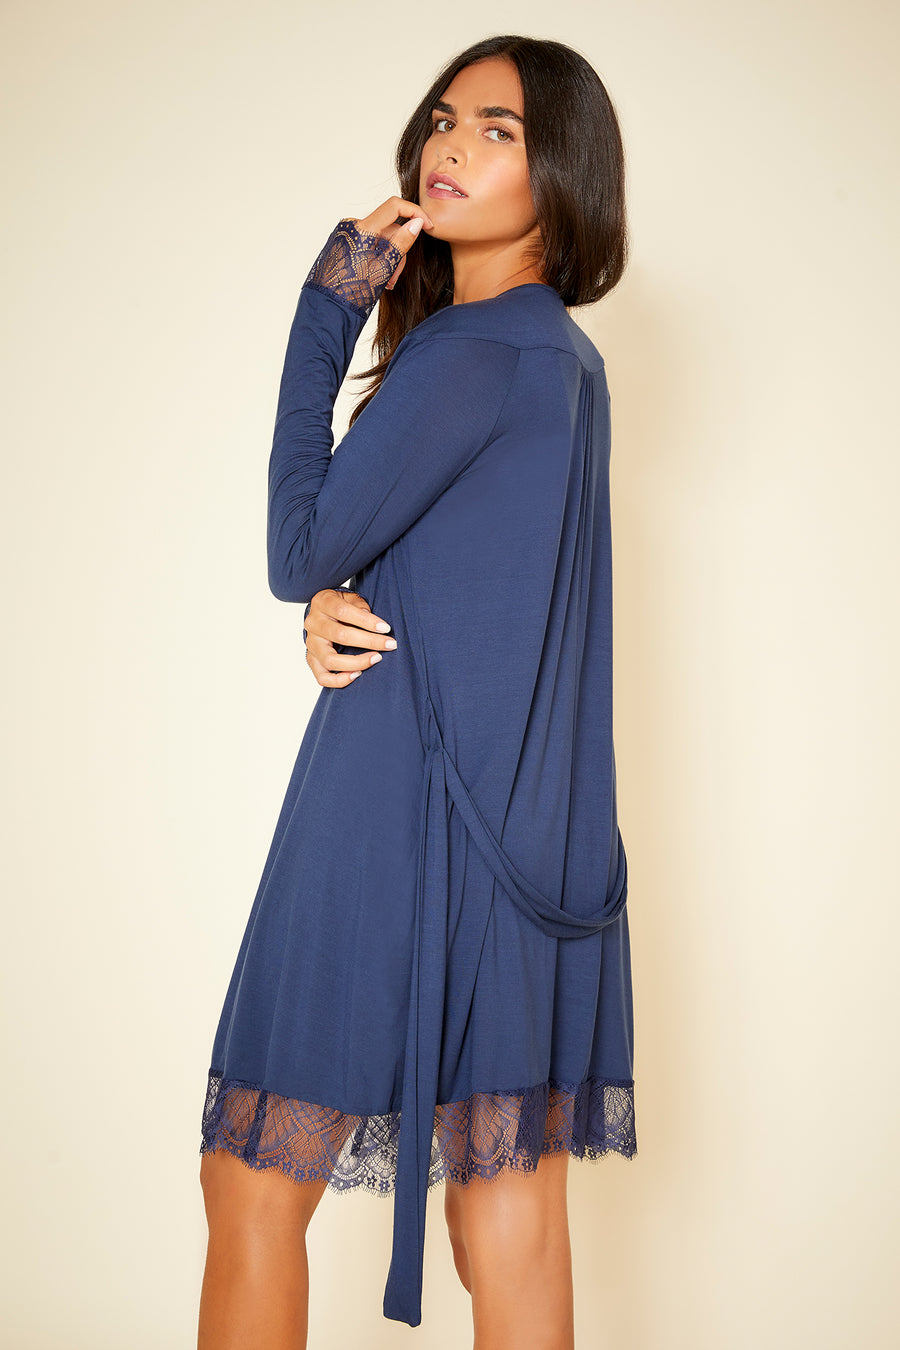 Blue Robe - Cheyenne Sleep Wear Long Sleeve Robe